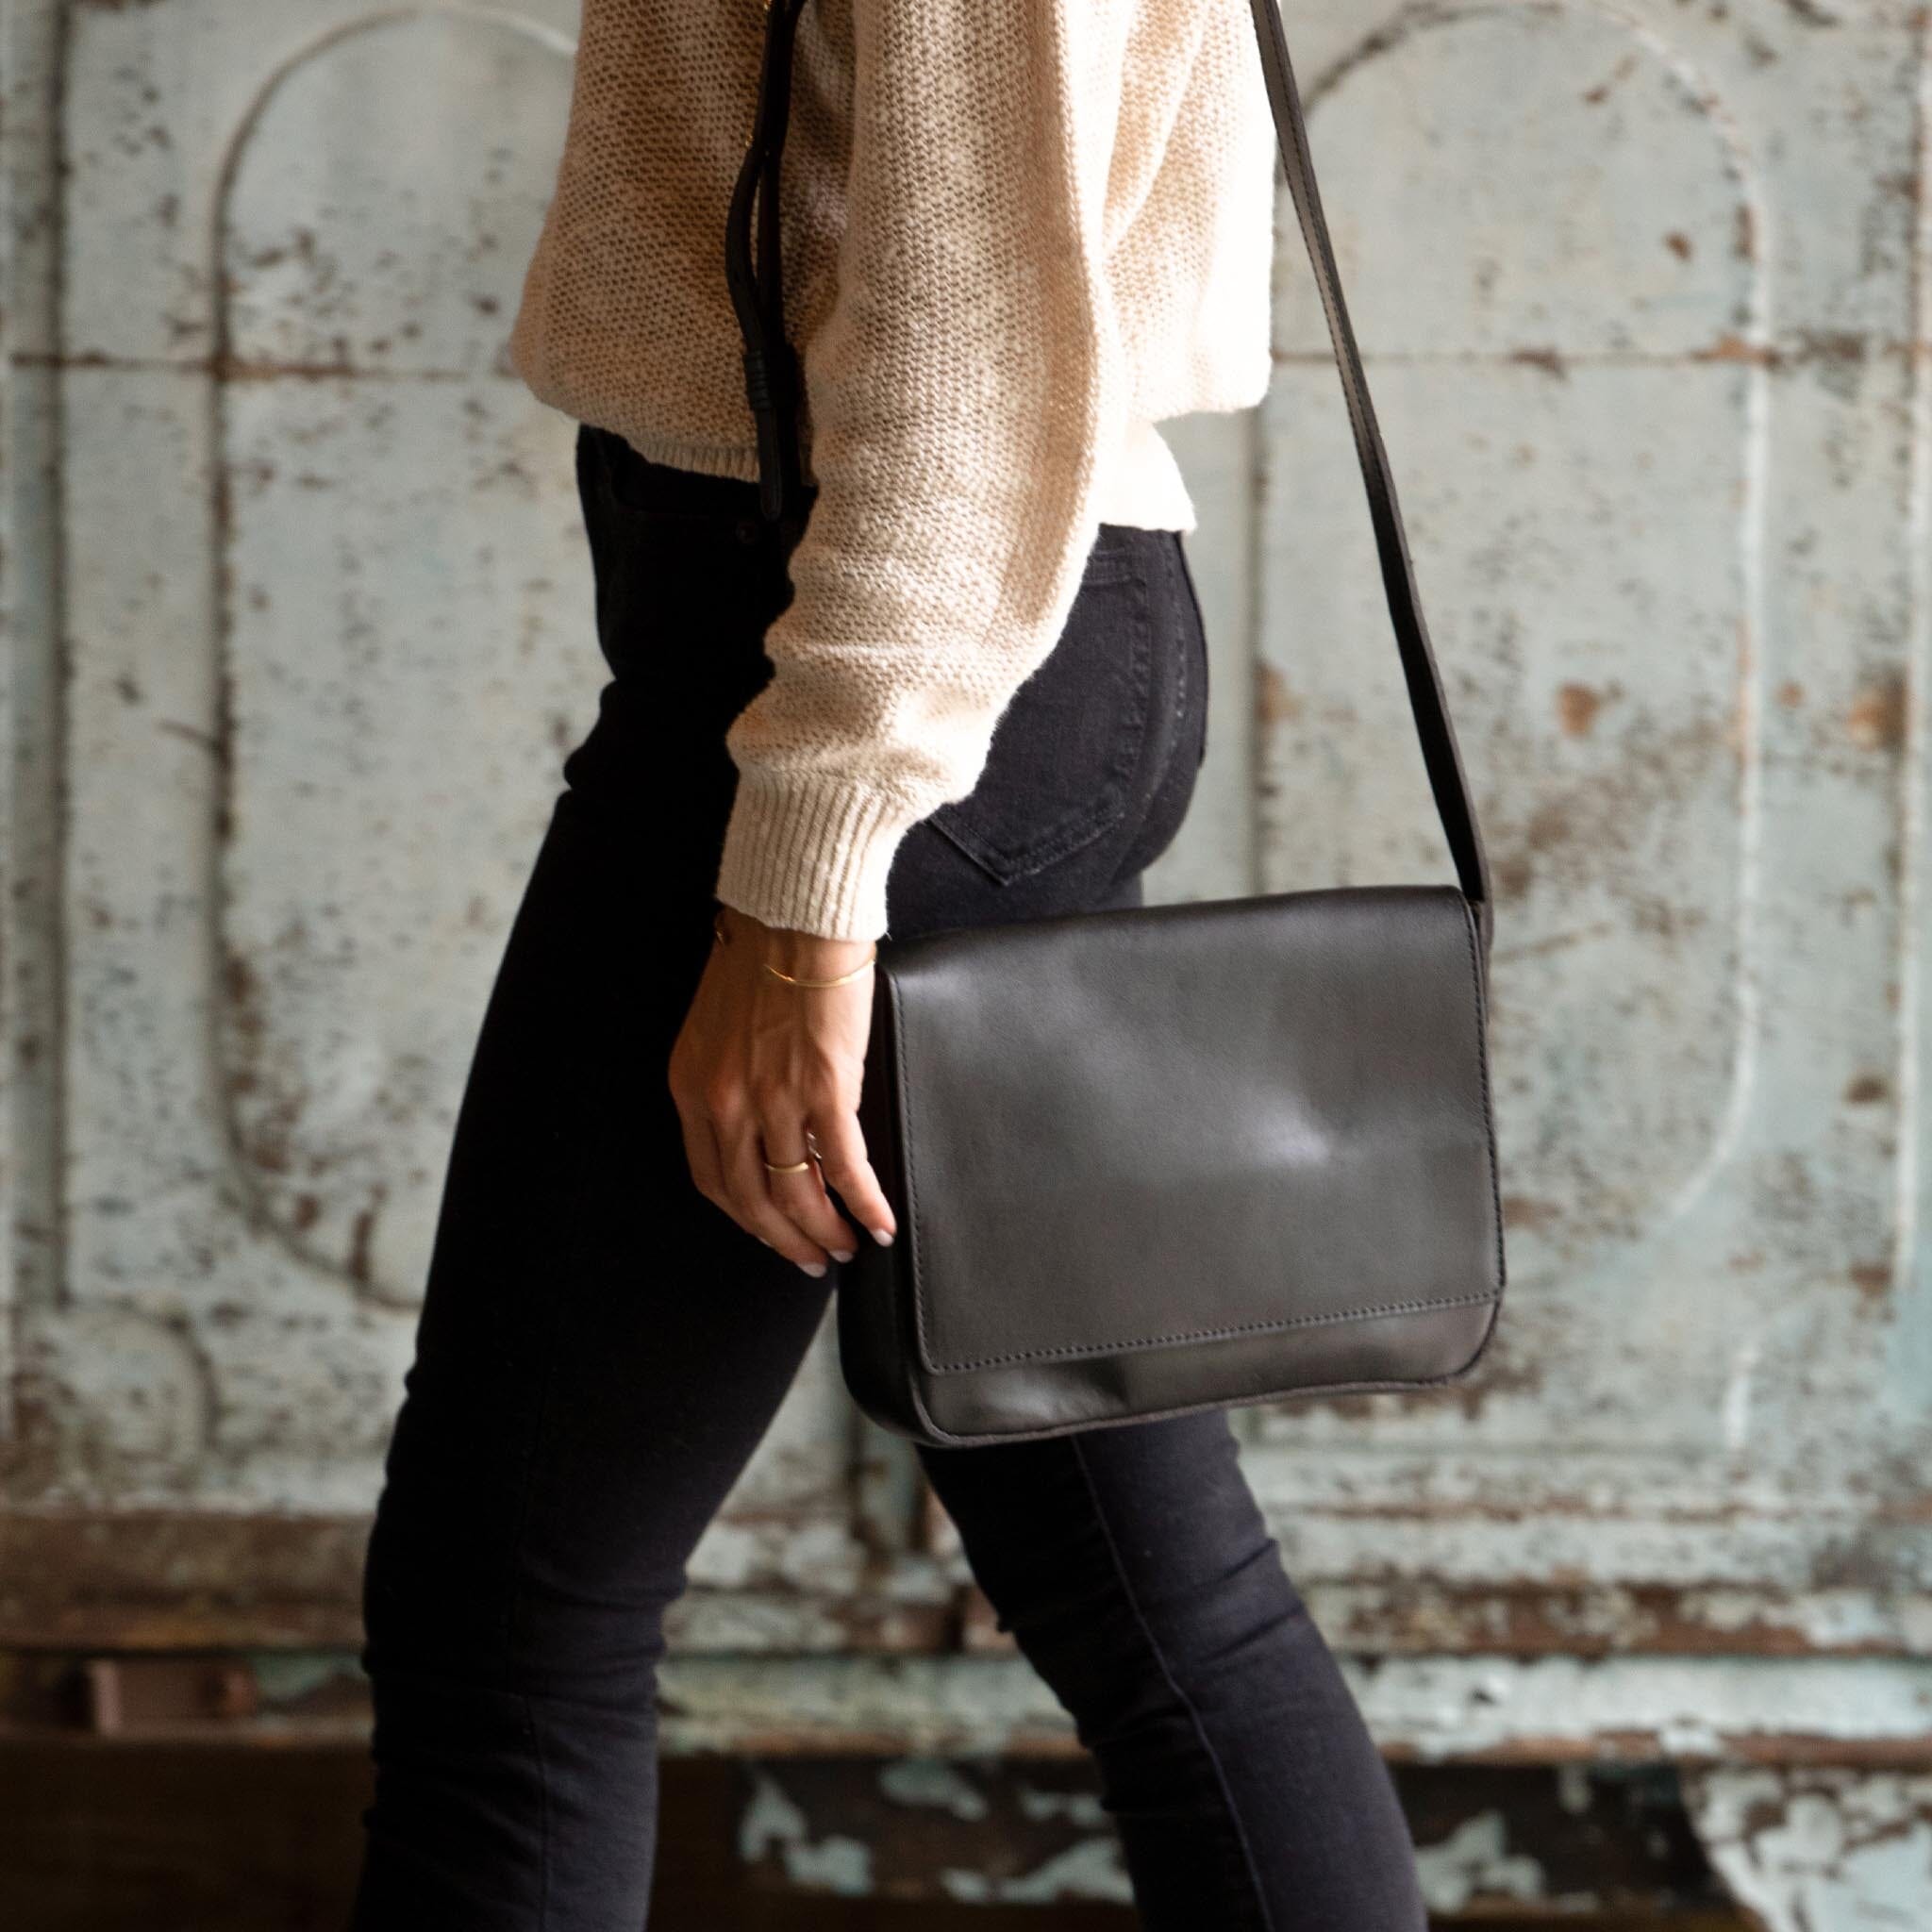 Retro Style Crossbody Bag, Mini Faux Leather Flap Purse, Women's Wide Strap Shoulder Bag (7.08*5.11*3.14) Inch,Black,$9.99,No Pattern,Solid Color